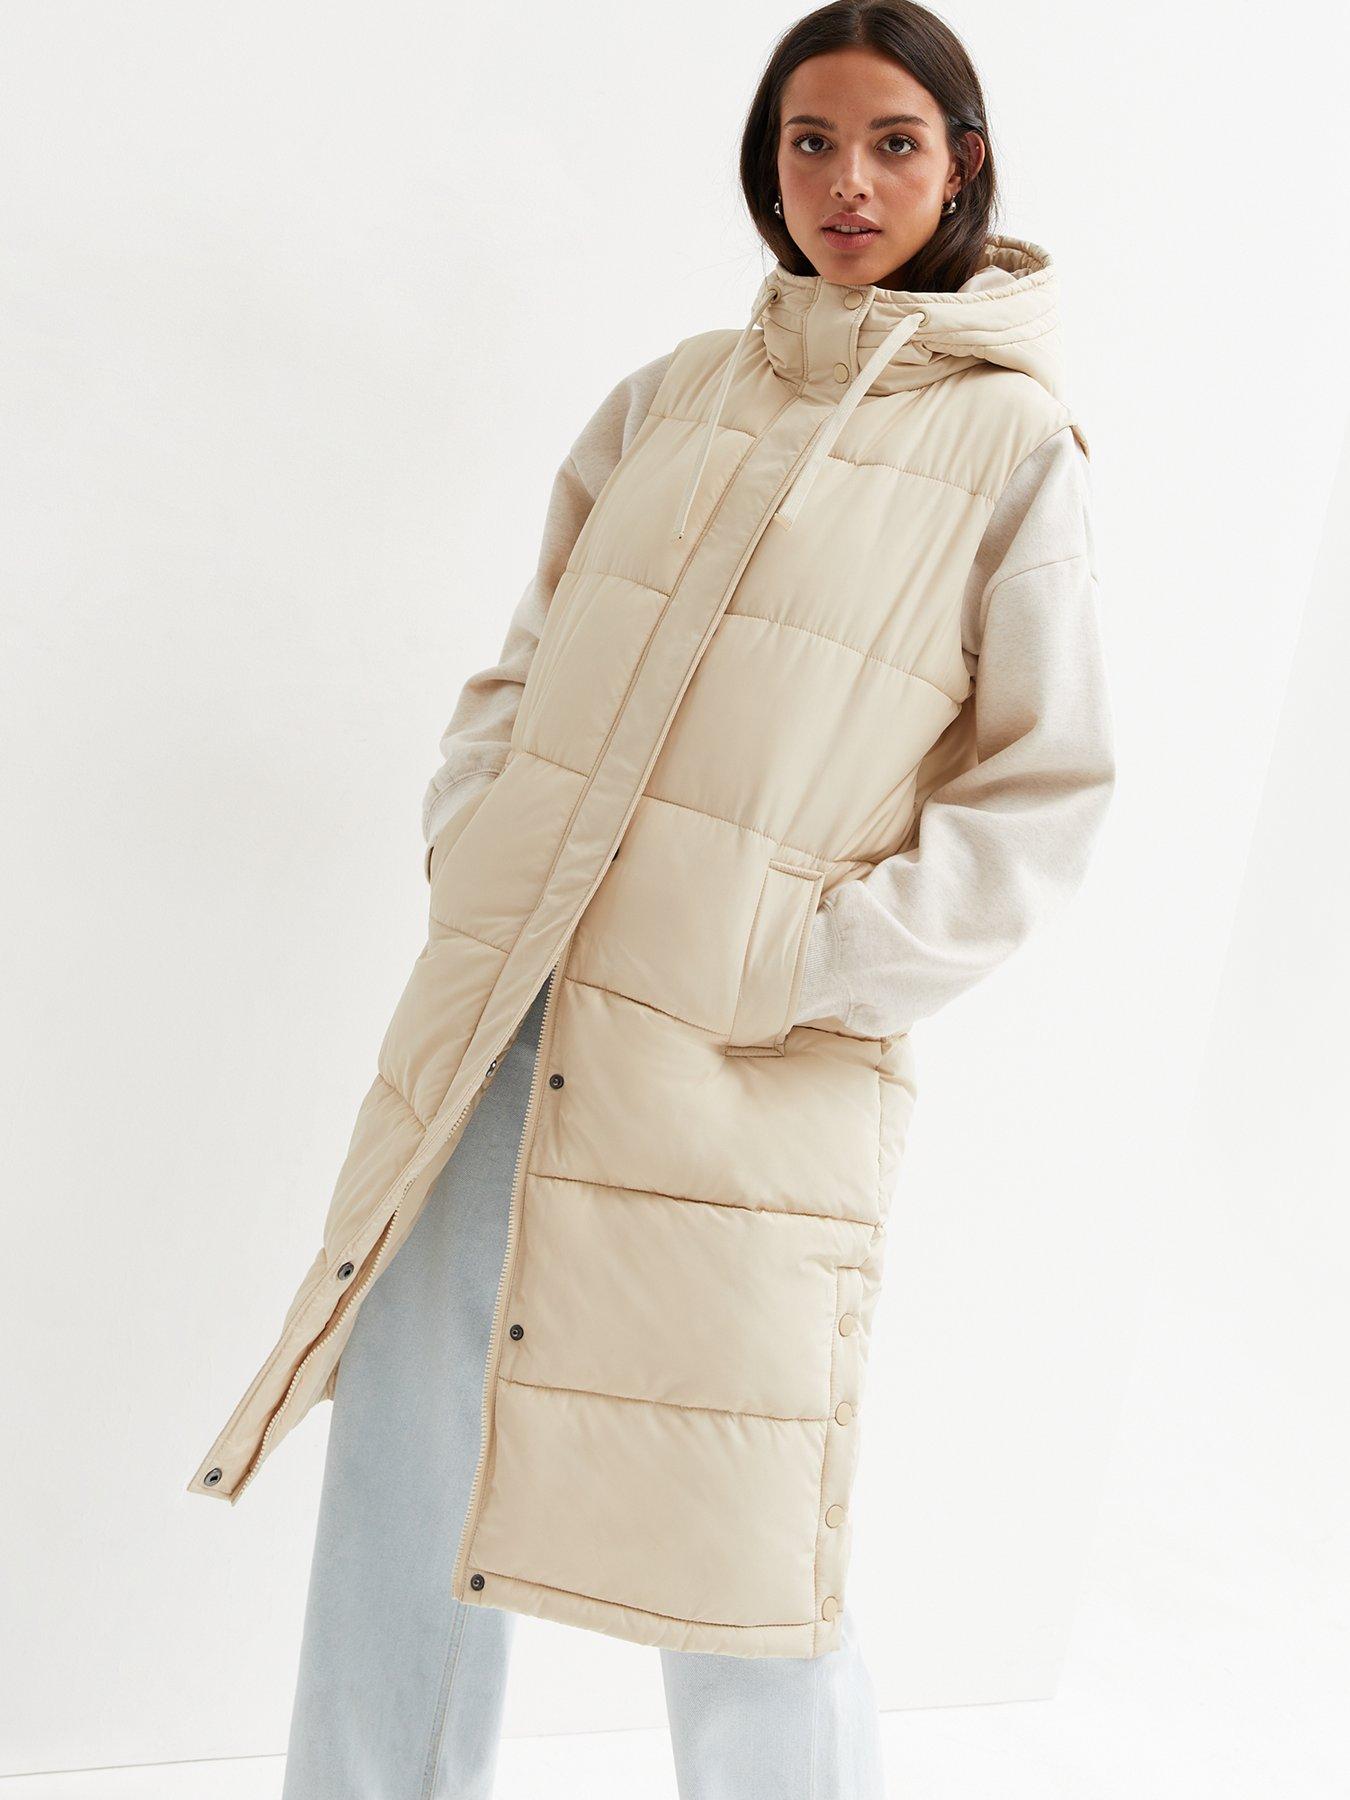 discount 78% Beige S Anany Long coat WOMEN FASHION Coats NO STYLE 